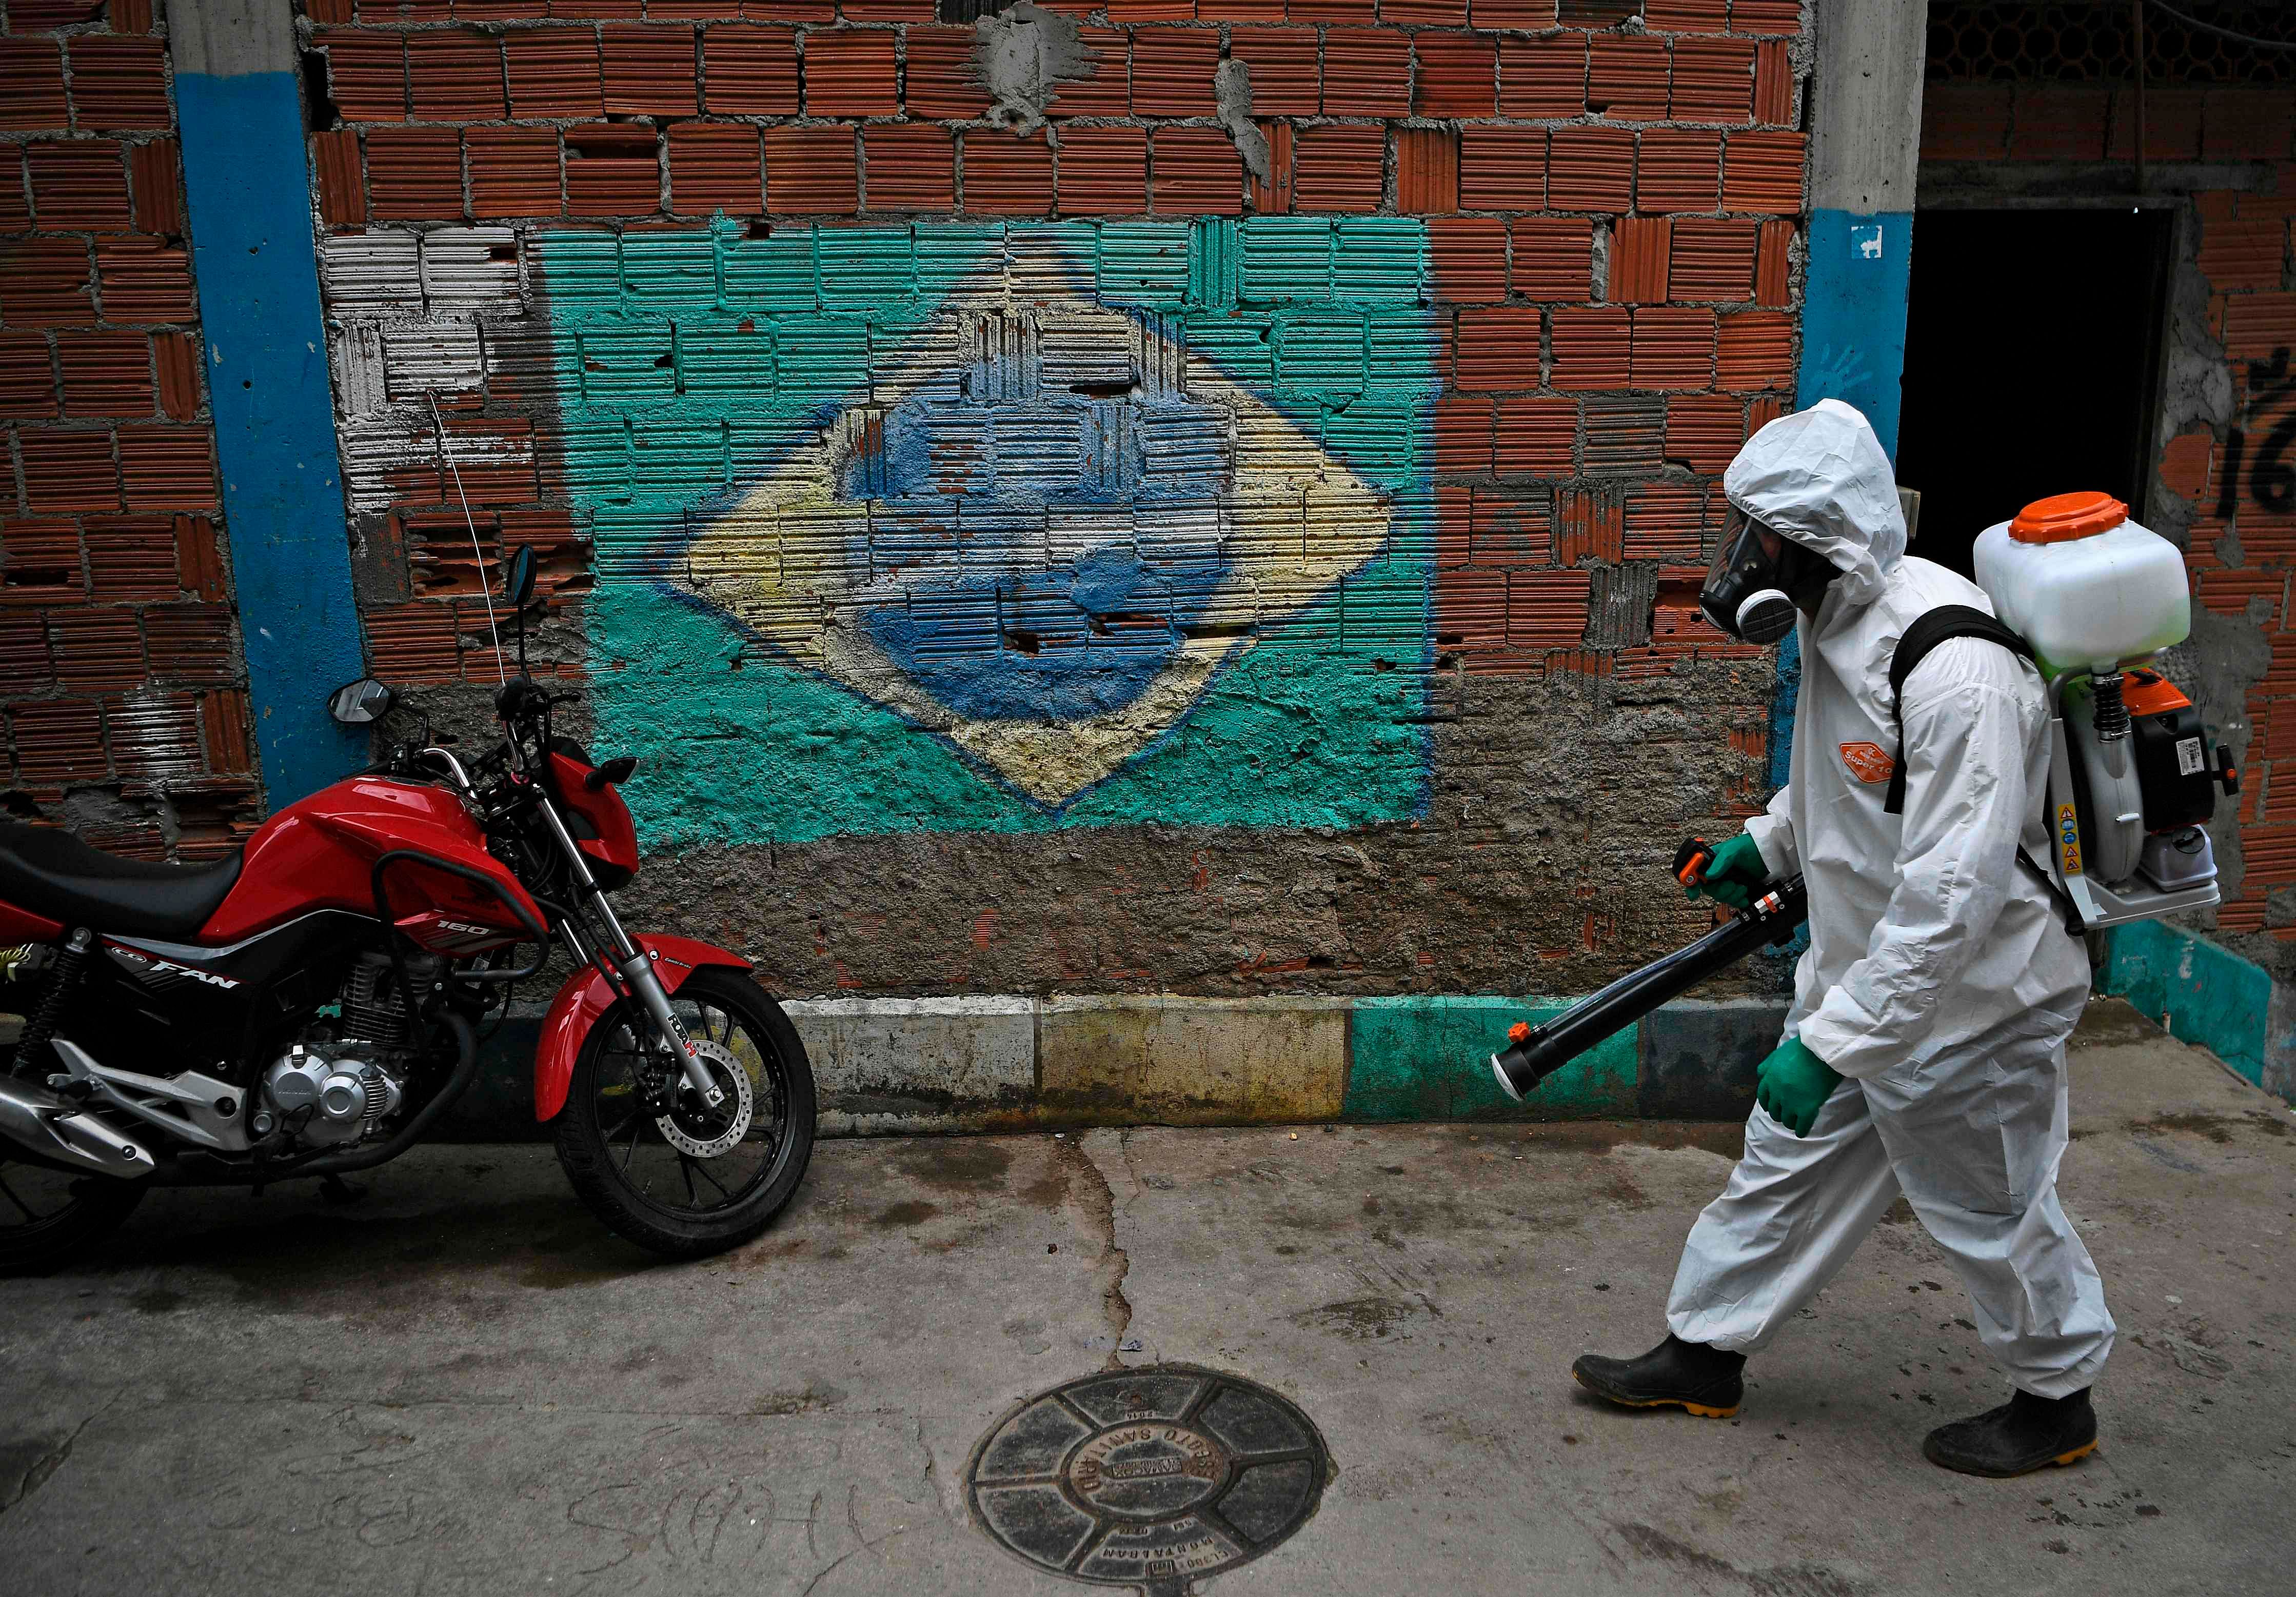 A volunteer walks past a mural of the Brazilian flag as he disinfects an area inside Babilonia favela, in Rio de Janeiro. (Credit: Reuters)